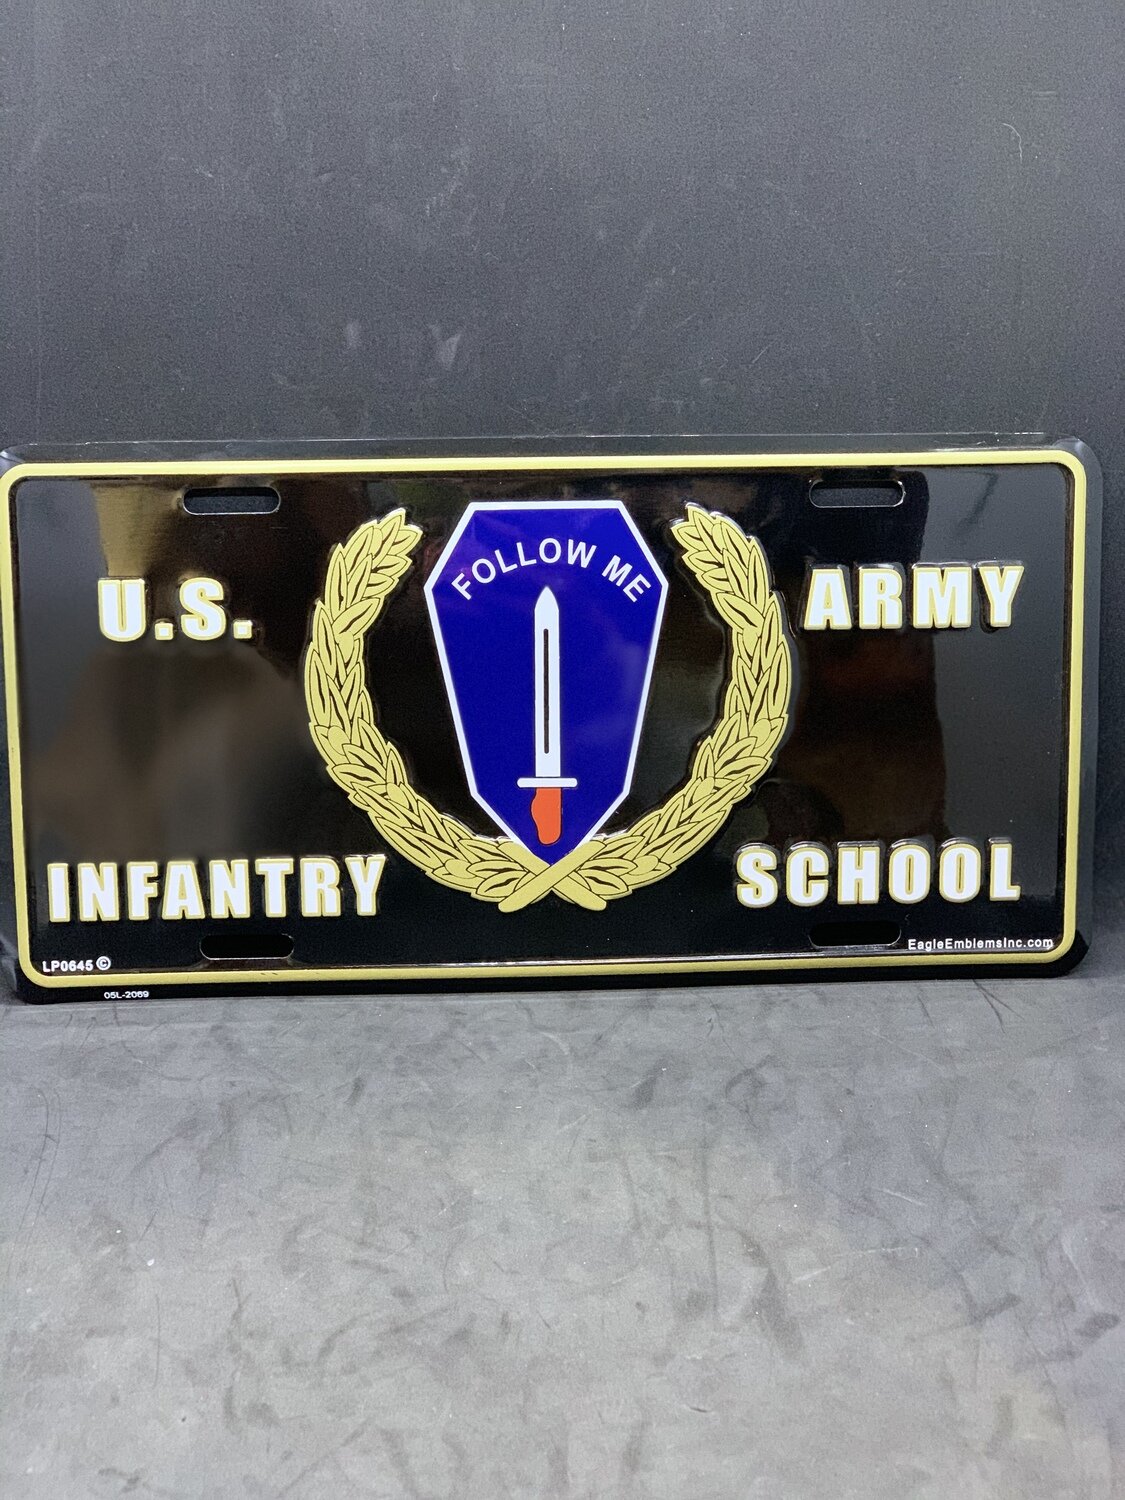 U.S. Army Inf. School License Plate